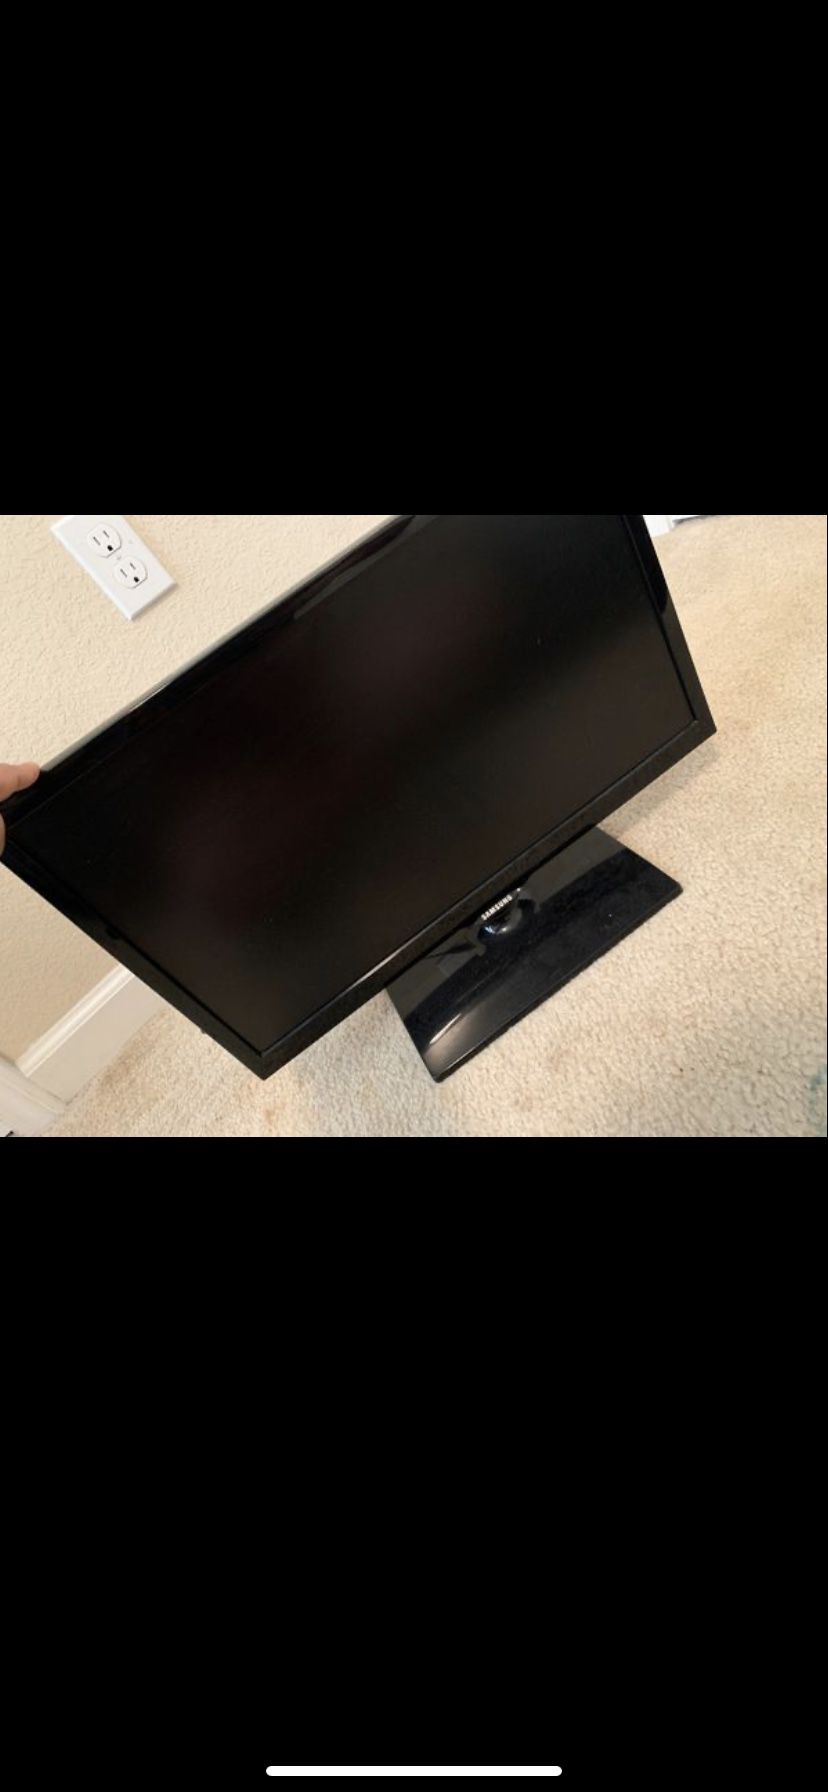 Flatscreen Tv. 22 inch.